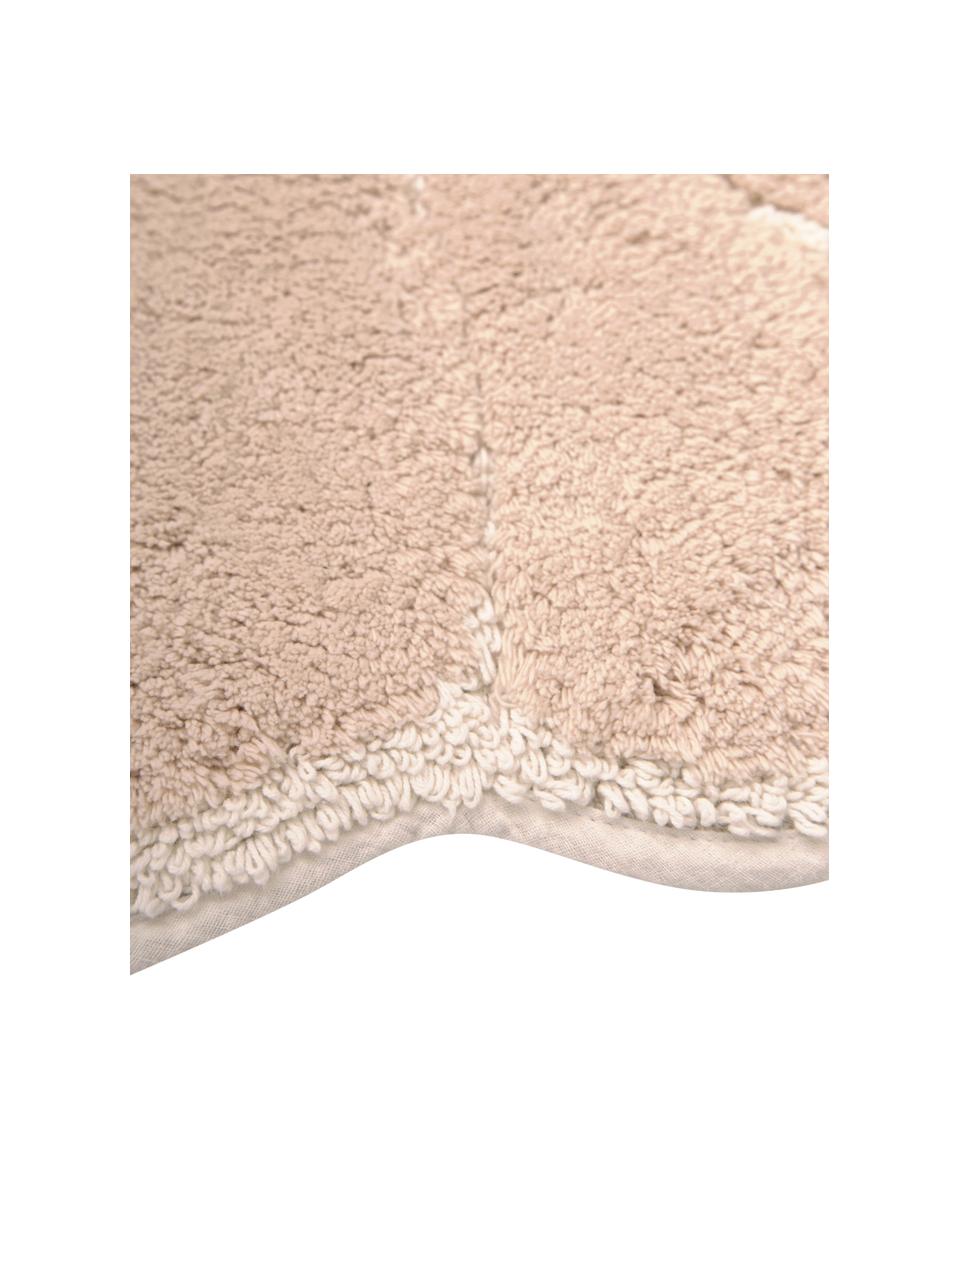 Koupelnový kobereček z bio bavlny Soft, 100% bavlna, certifikát BCI, Režná, bílá, Š 70 cm, D 80 cm